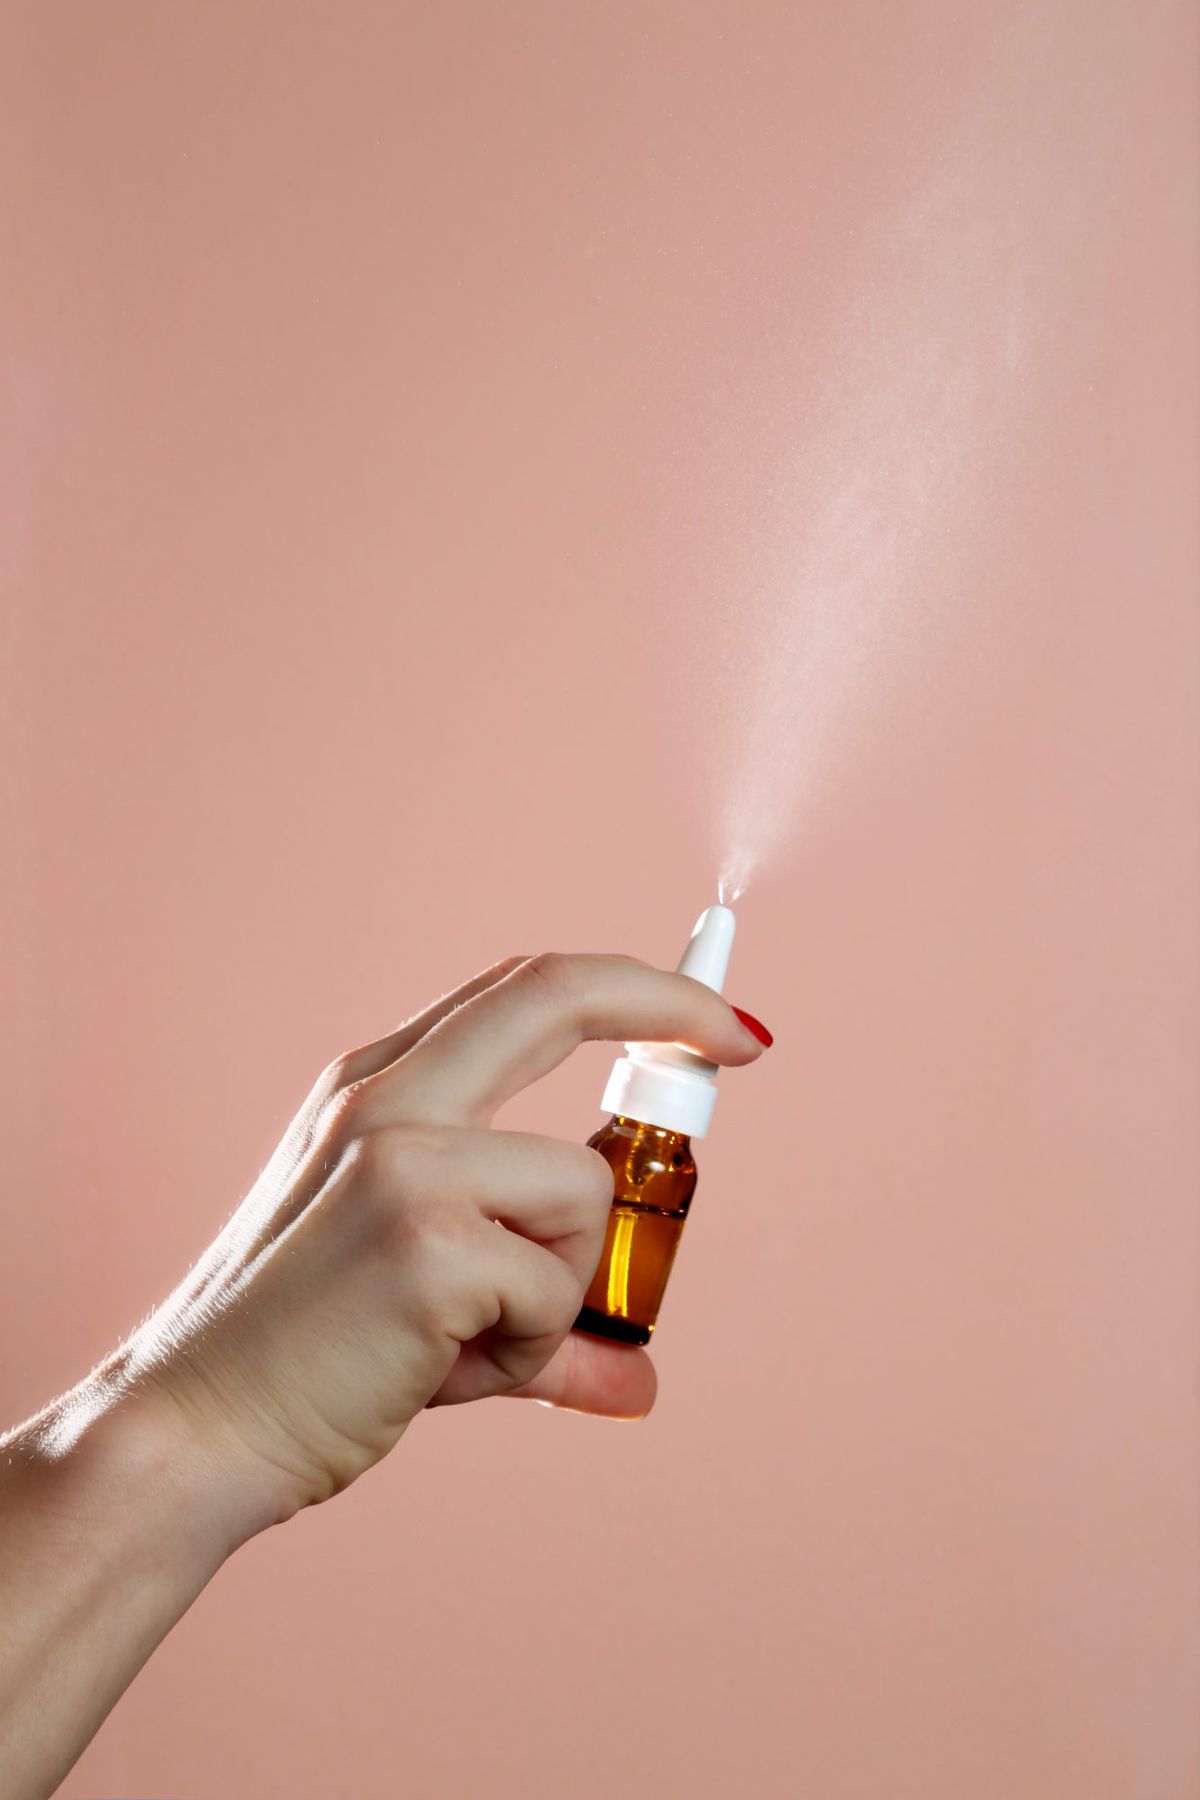 GnRH agonist nasal spray for uterine fibroids